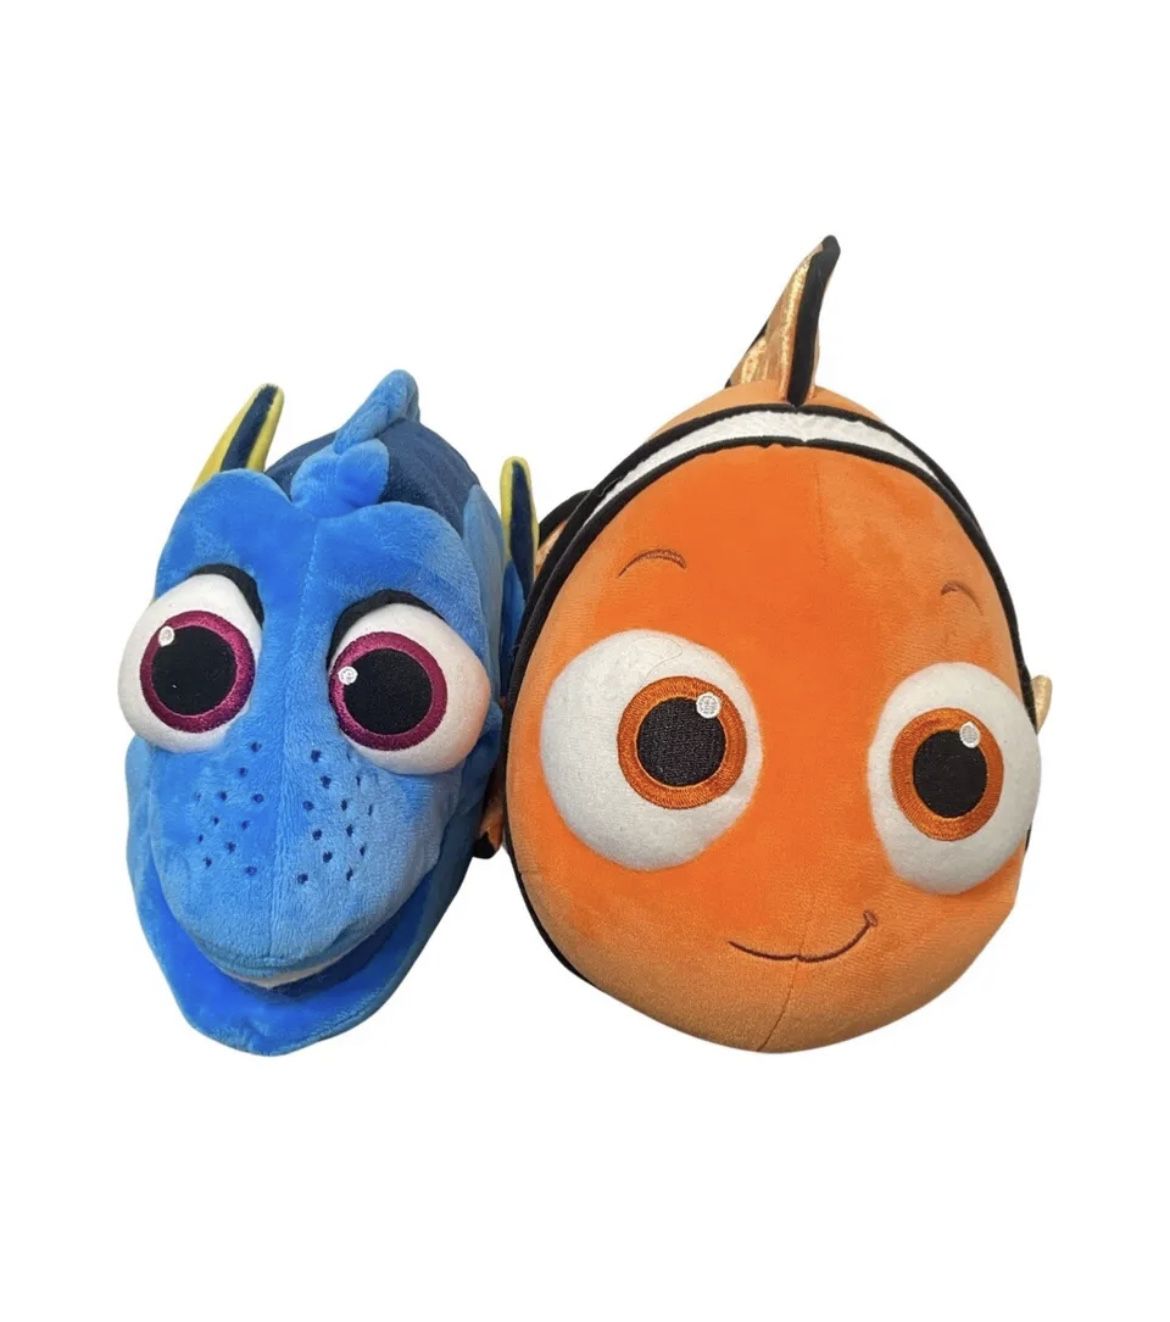 BIG Build A Bear Plush Nemo Disney Pixar Finding Dory 18" Clown Fish stuffed animal 